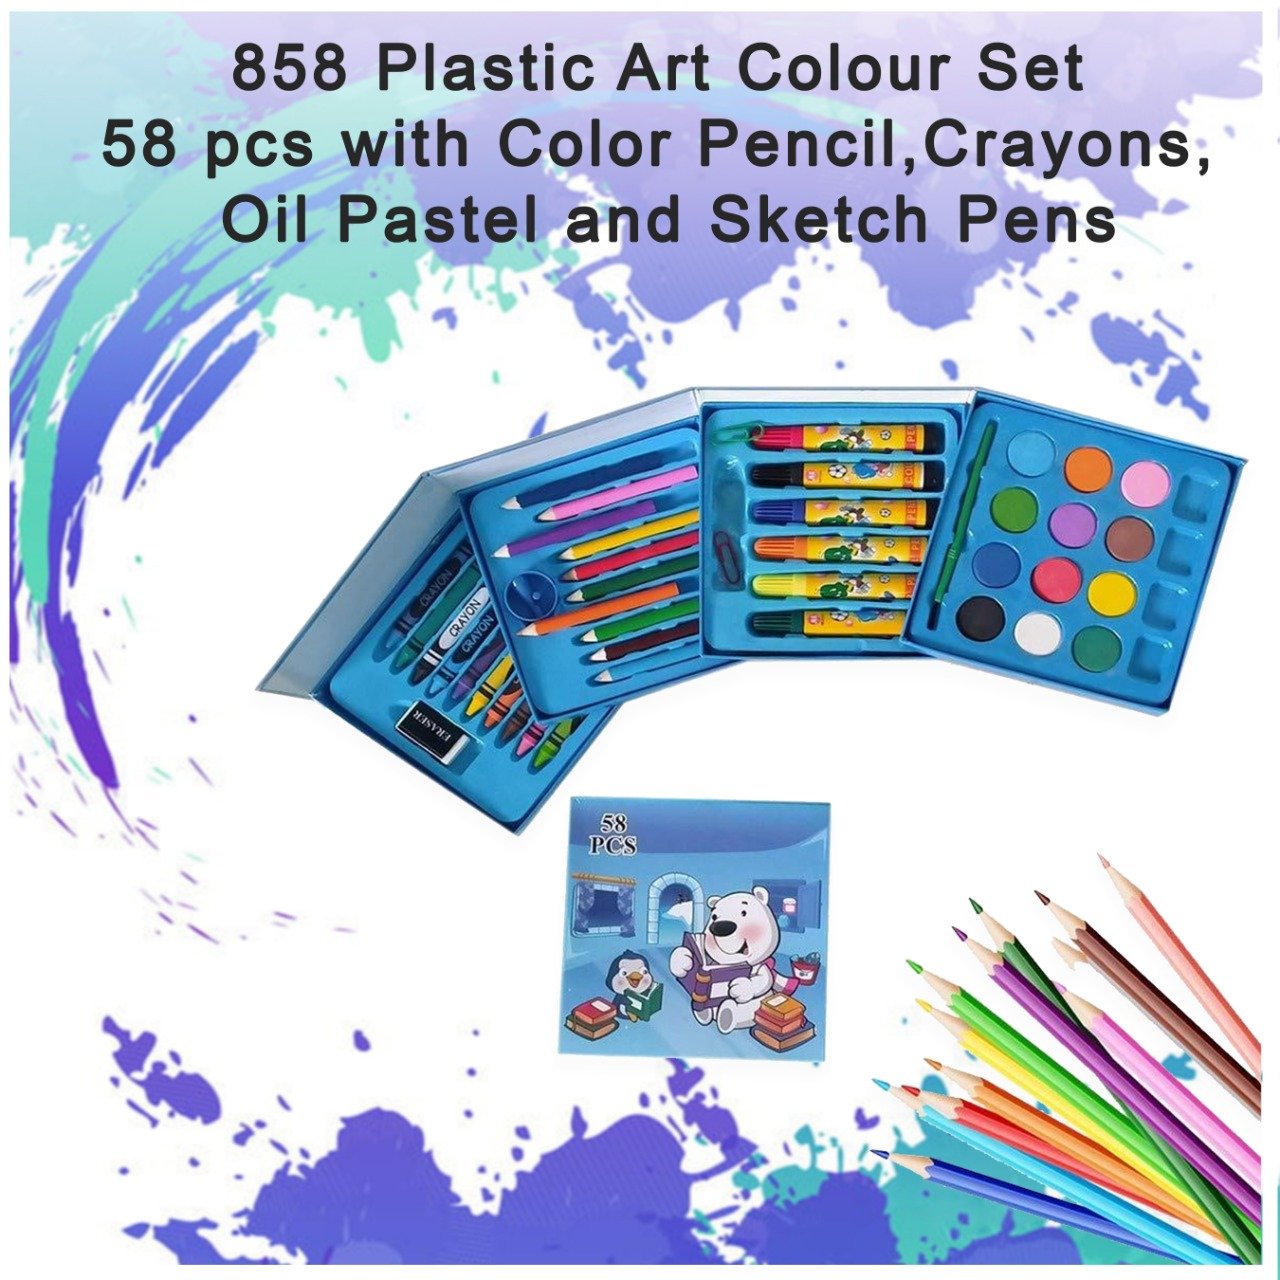 0858 Plastic Art Colour Set 58 pcs with Color Pencil, Crayons, Oil Pastel and Sketch Pens - SkyShopy